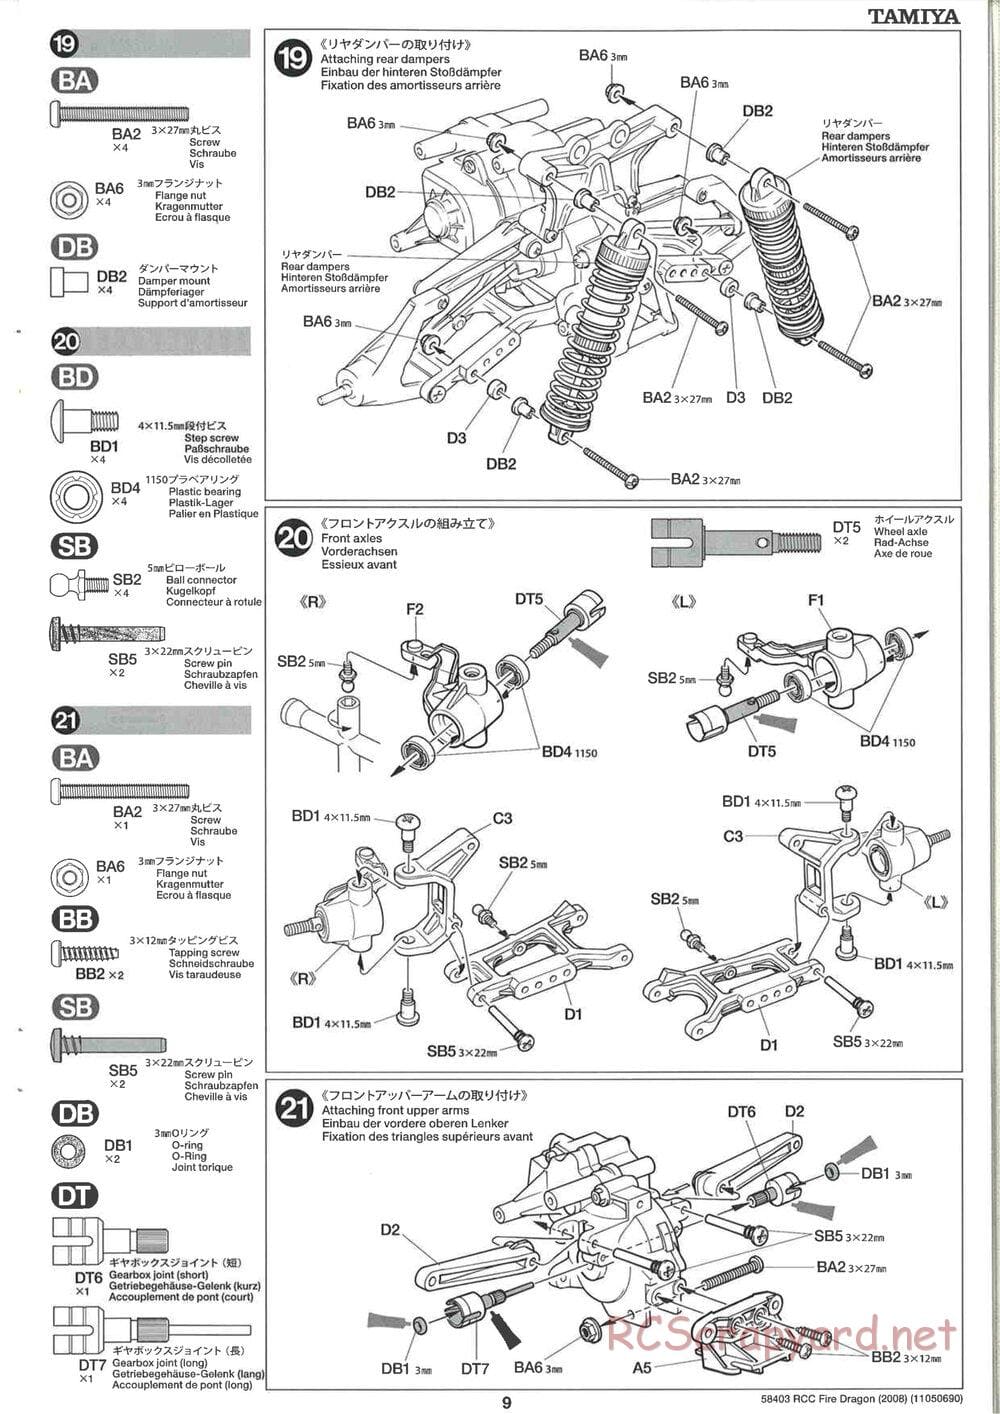 Tamiya - Fire Dragon 2008 - TS2 Chassis - Manual - Page 9